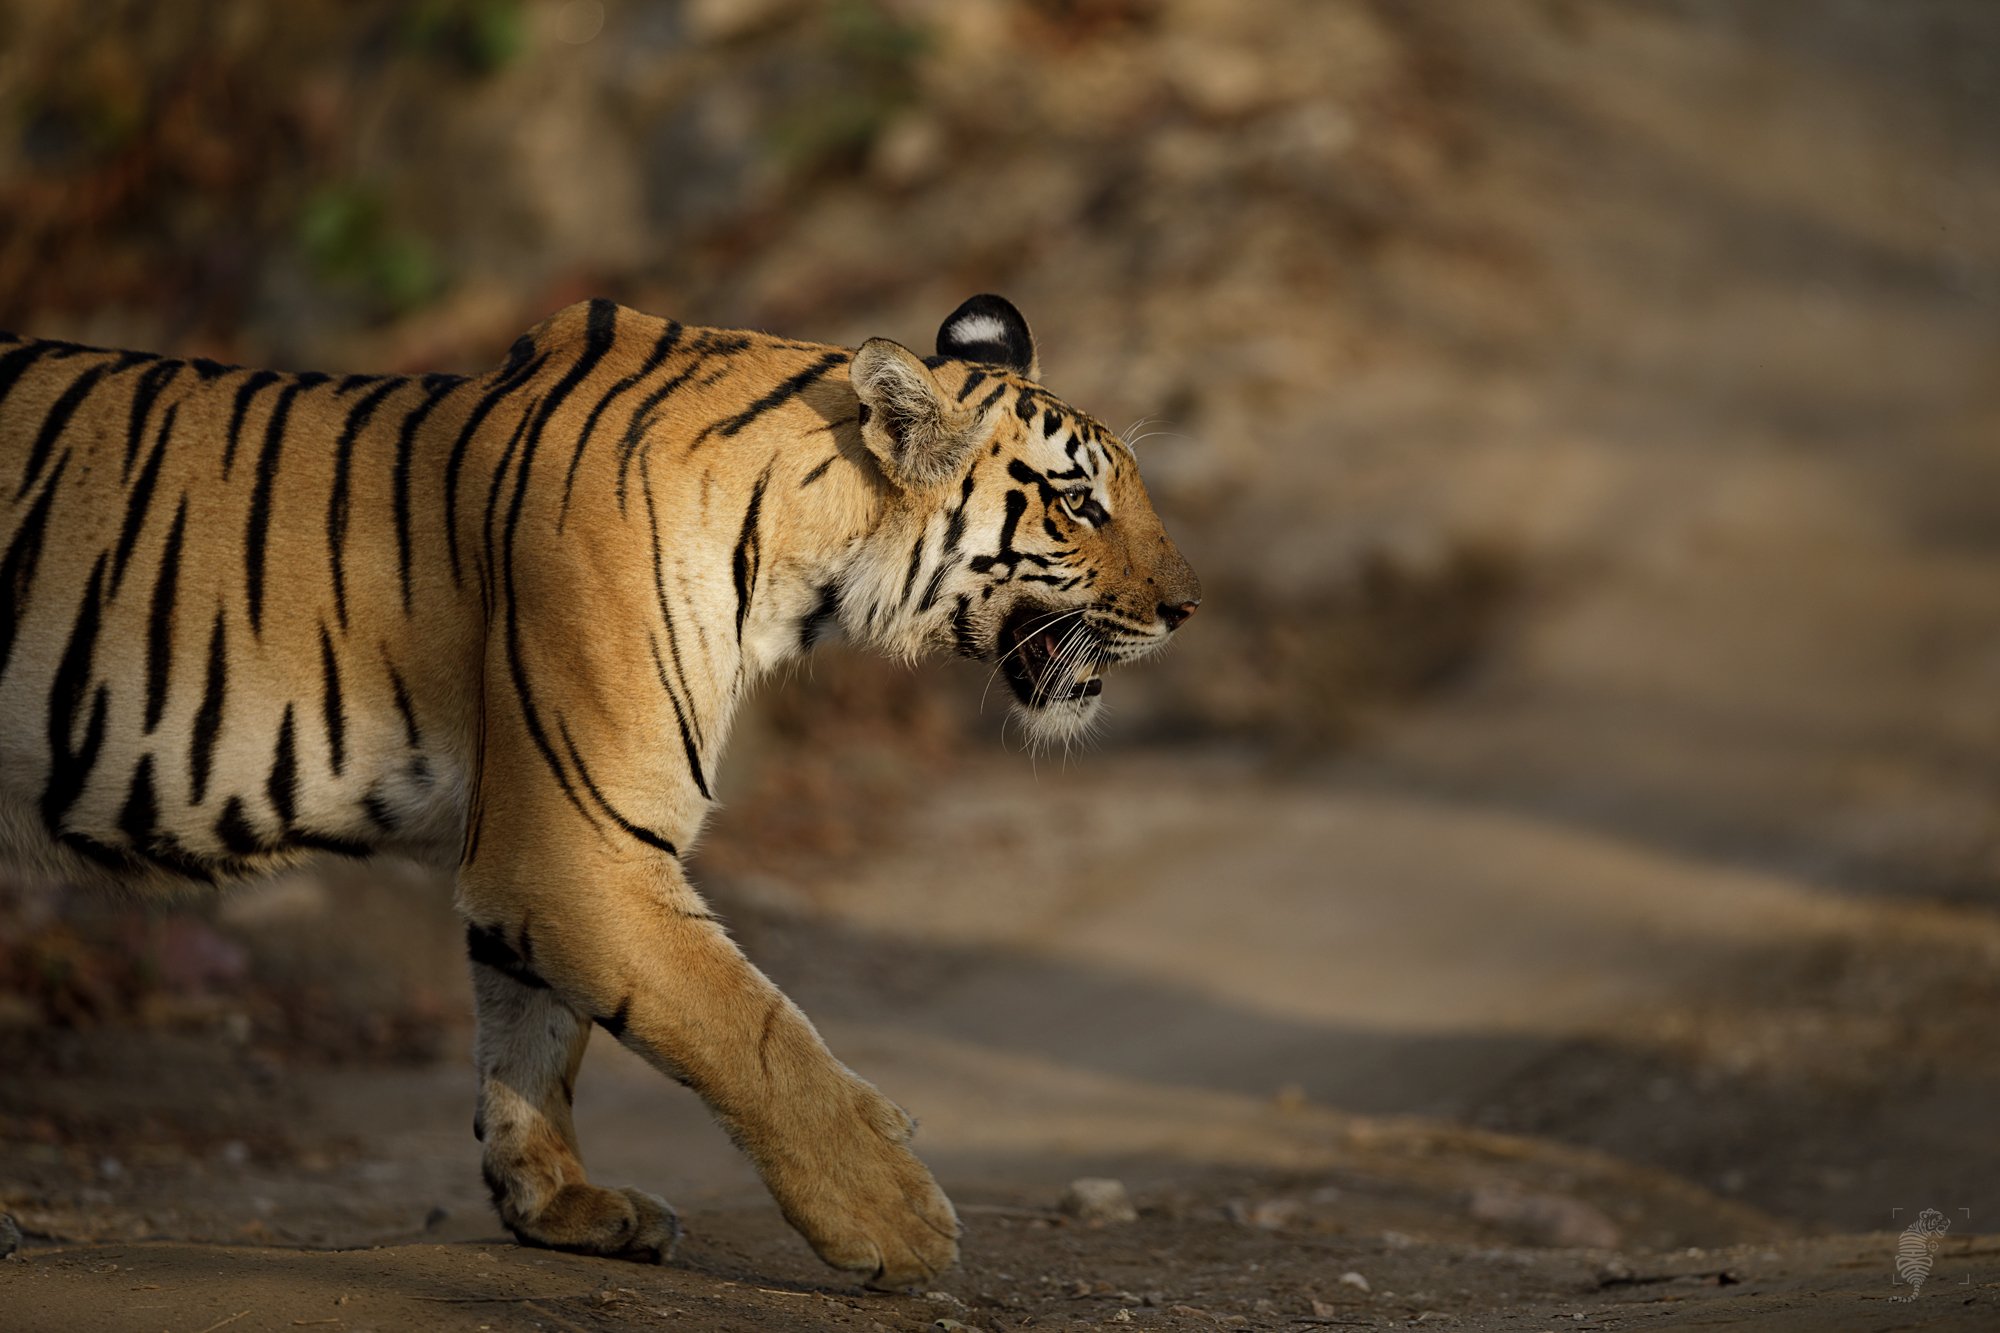 #Wildlife #Canon #India #Tigers #Sunlight #500mm, Abhijit D